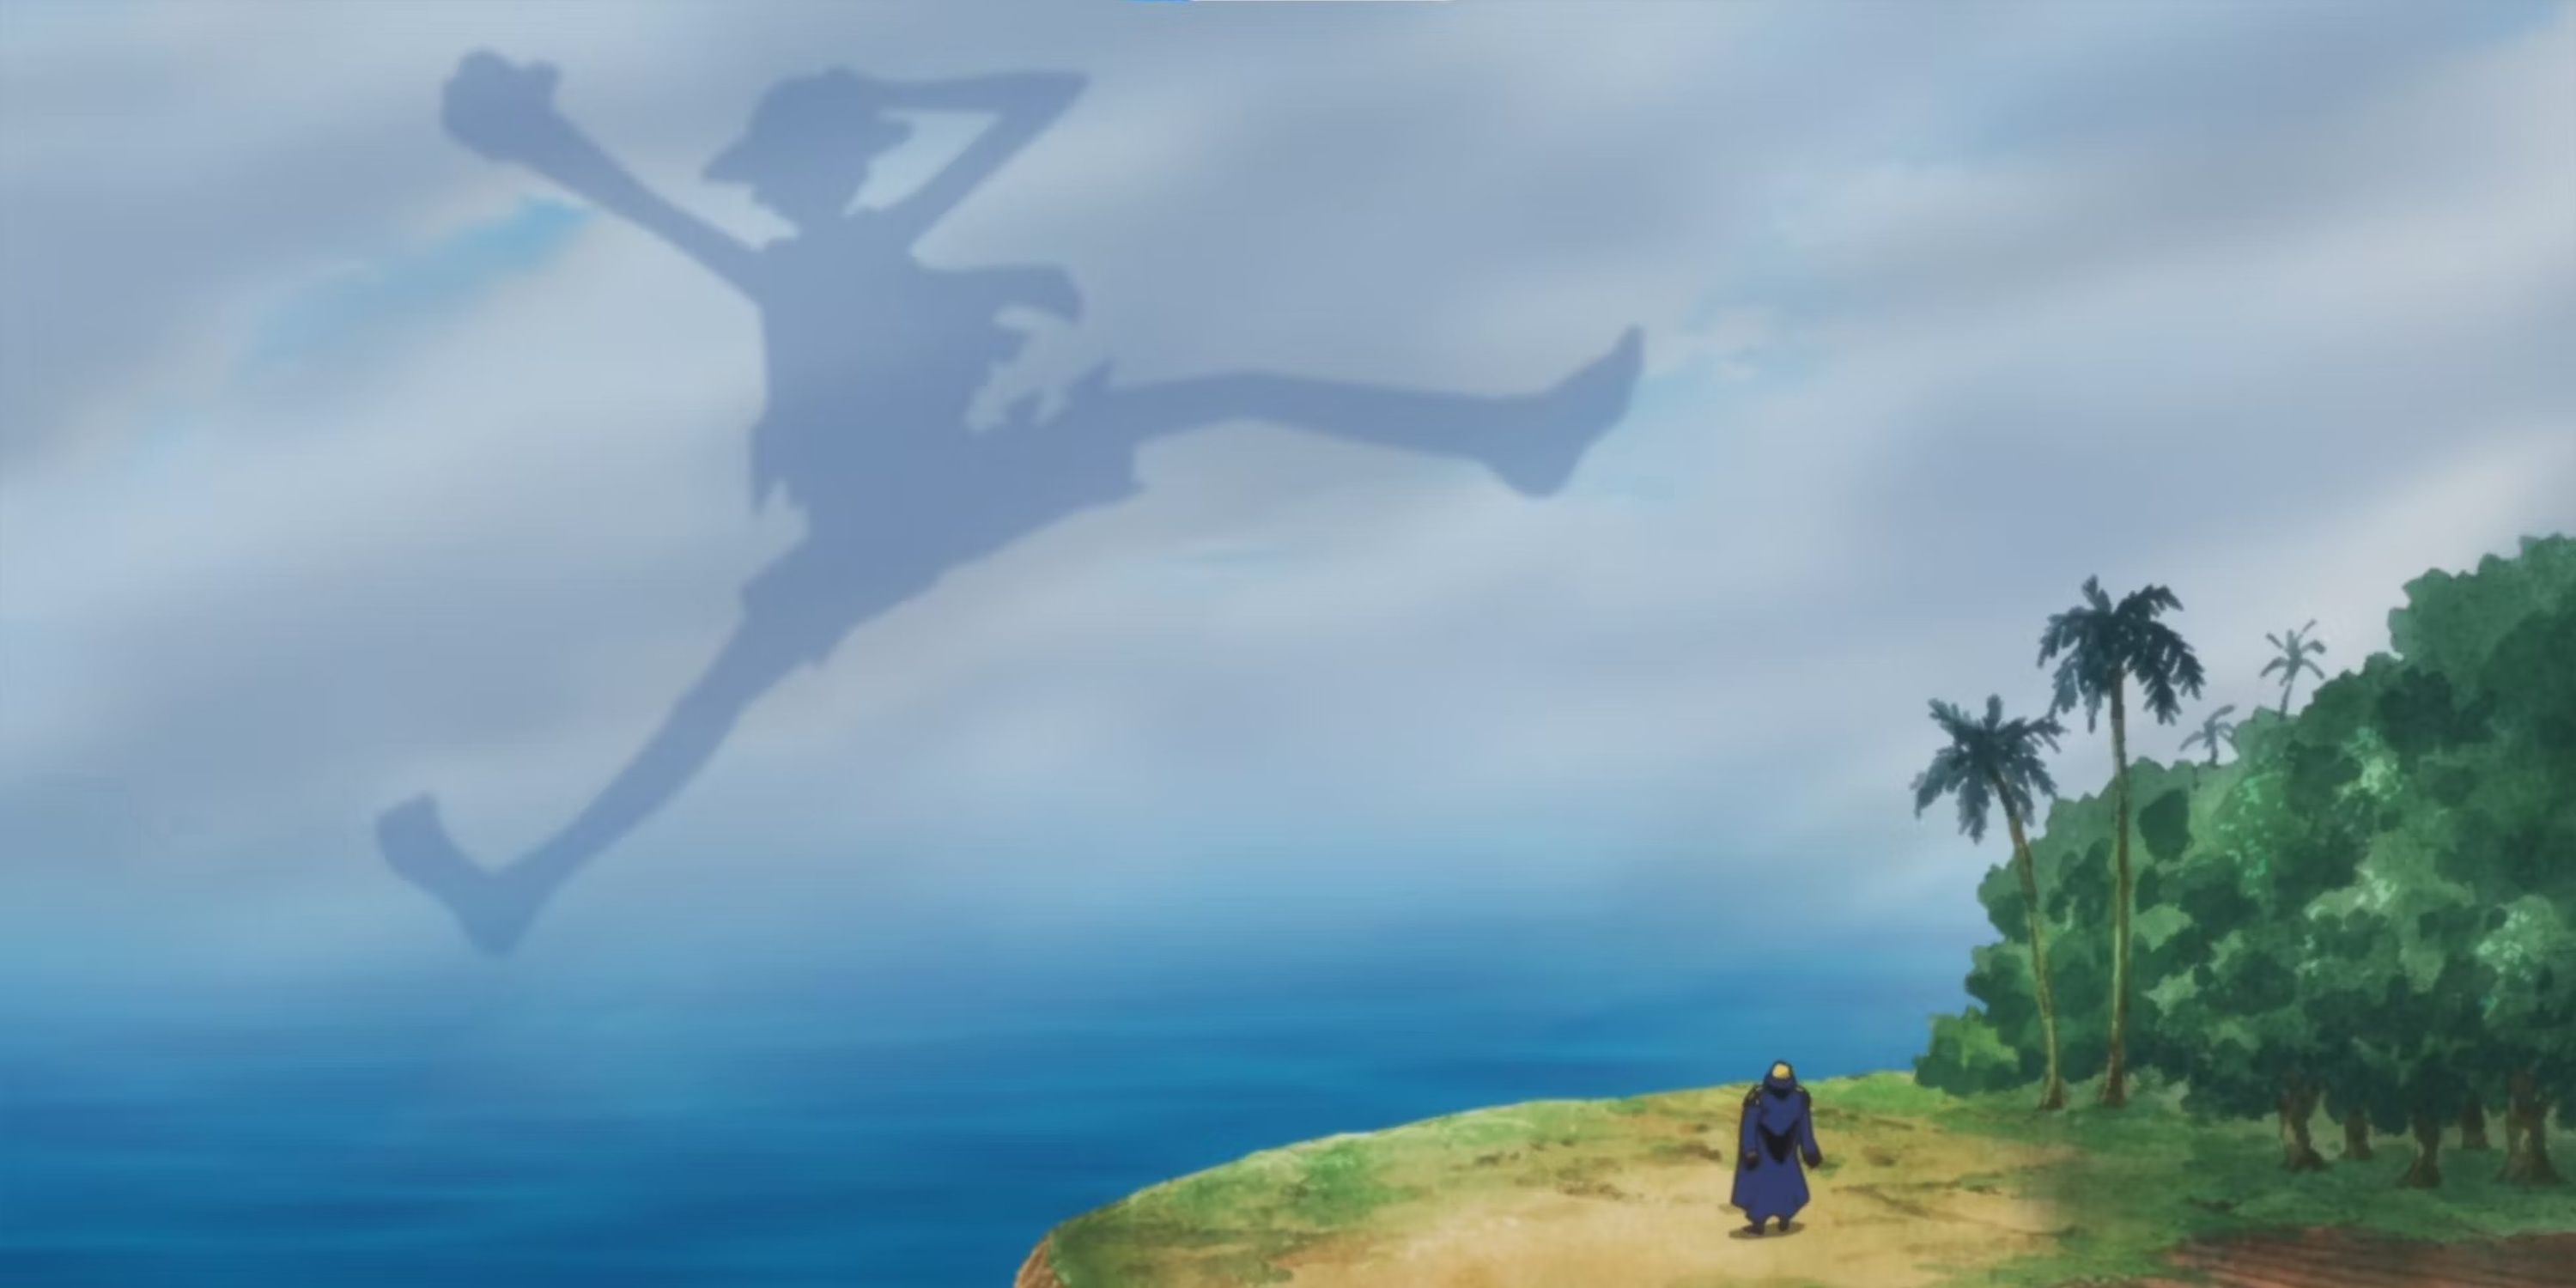 Monkey D. Luffy's shadow as seen in One Piece's Skypiea Arc